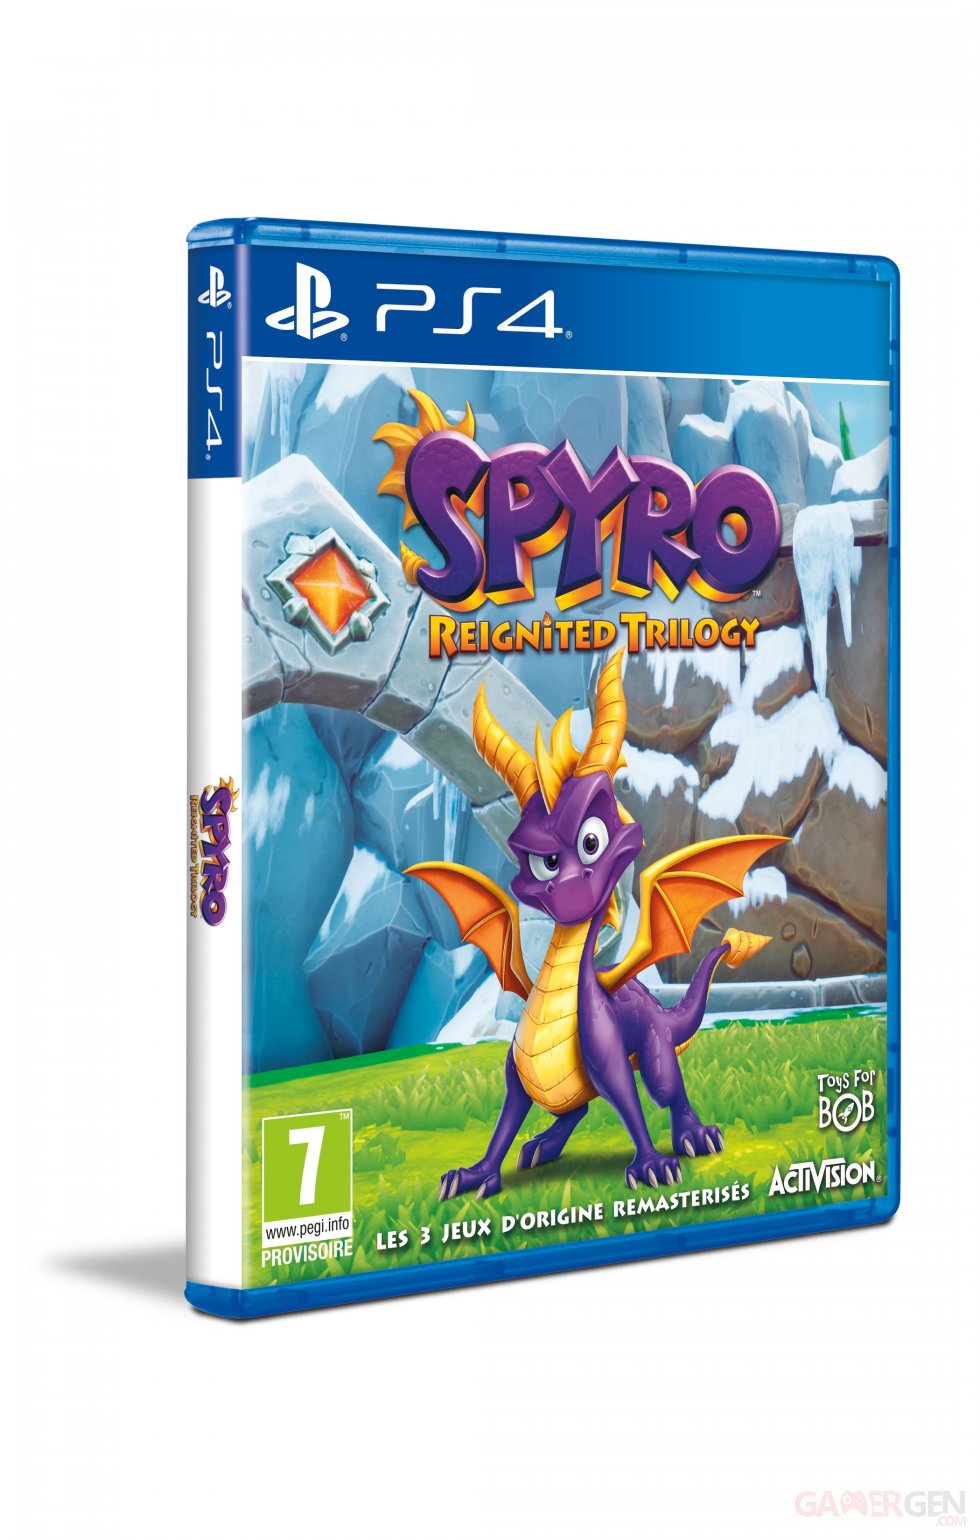 Spyro Reignited Trilogy Officiel Presse Jaquettes (2)